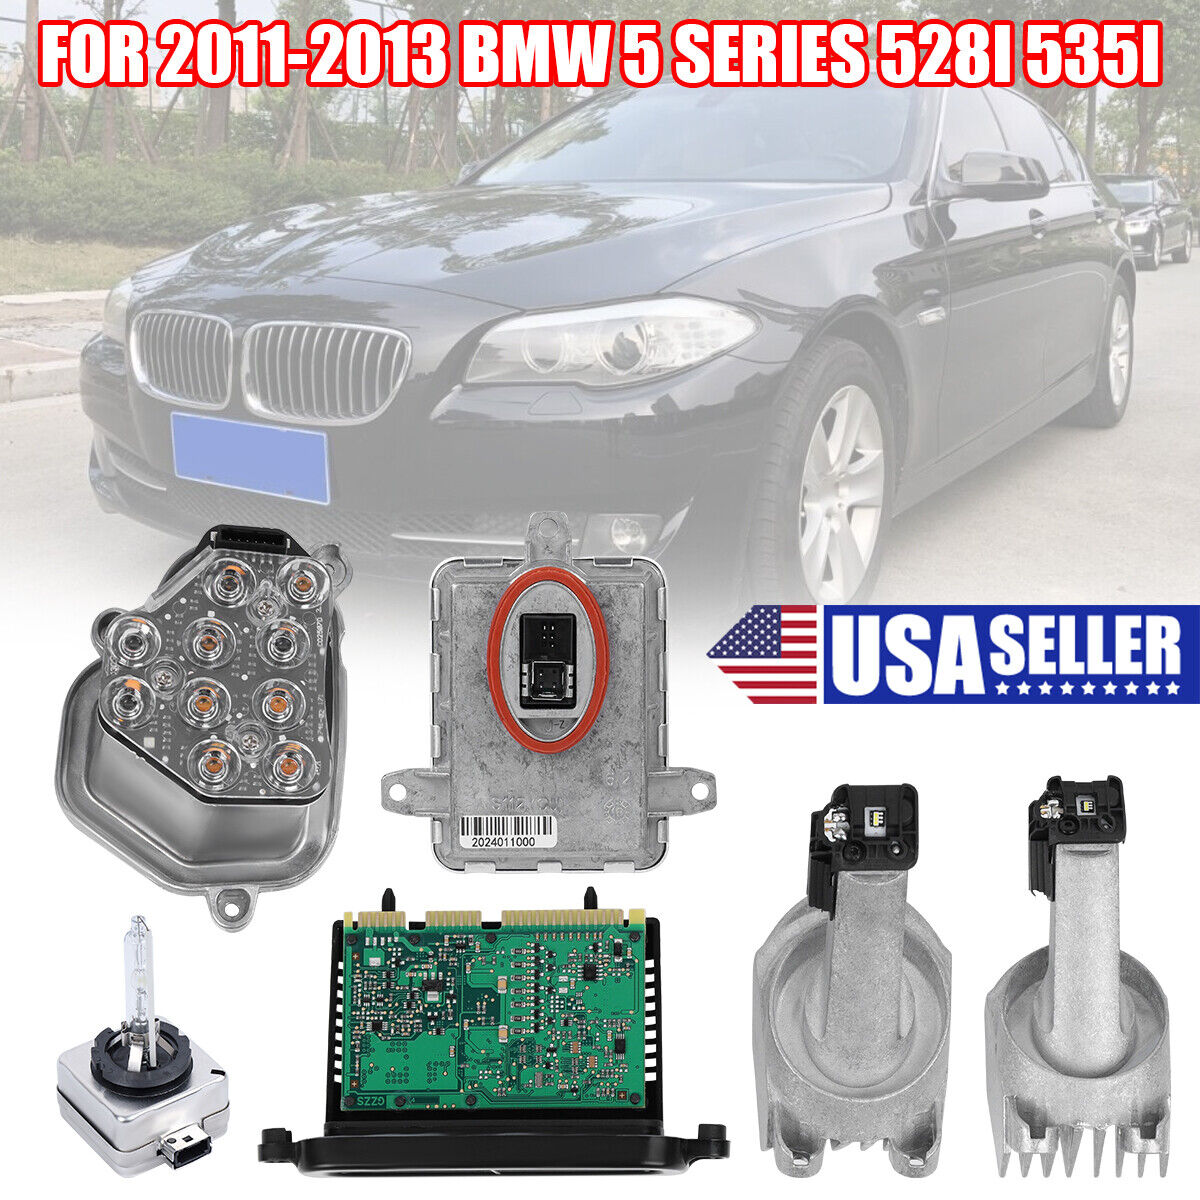 Xenon Ballast Bulb LED Module Diode Kit LH for BMW 5 Series 528i 535i 2011-2013